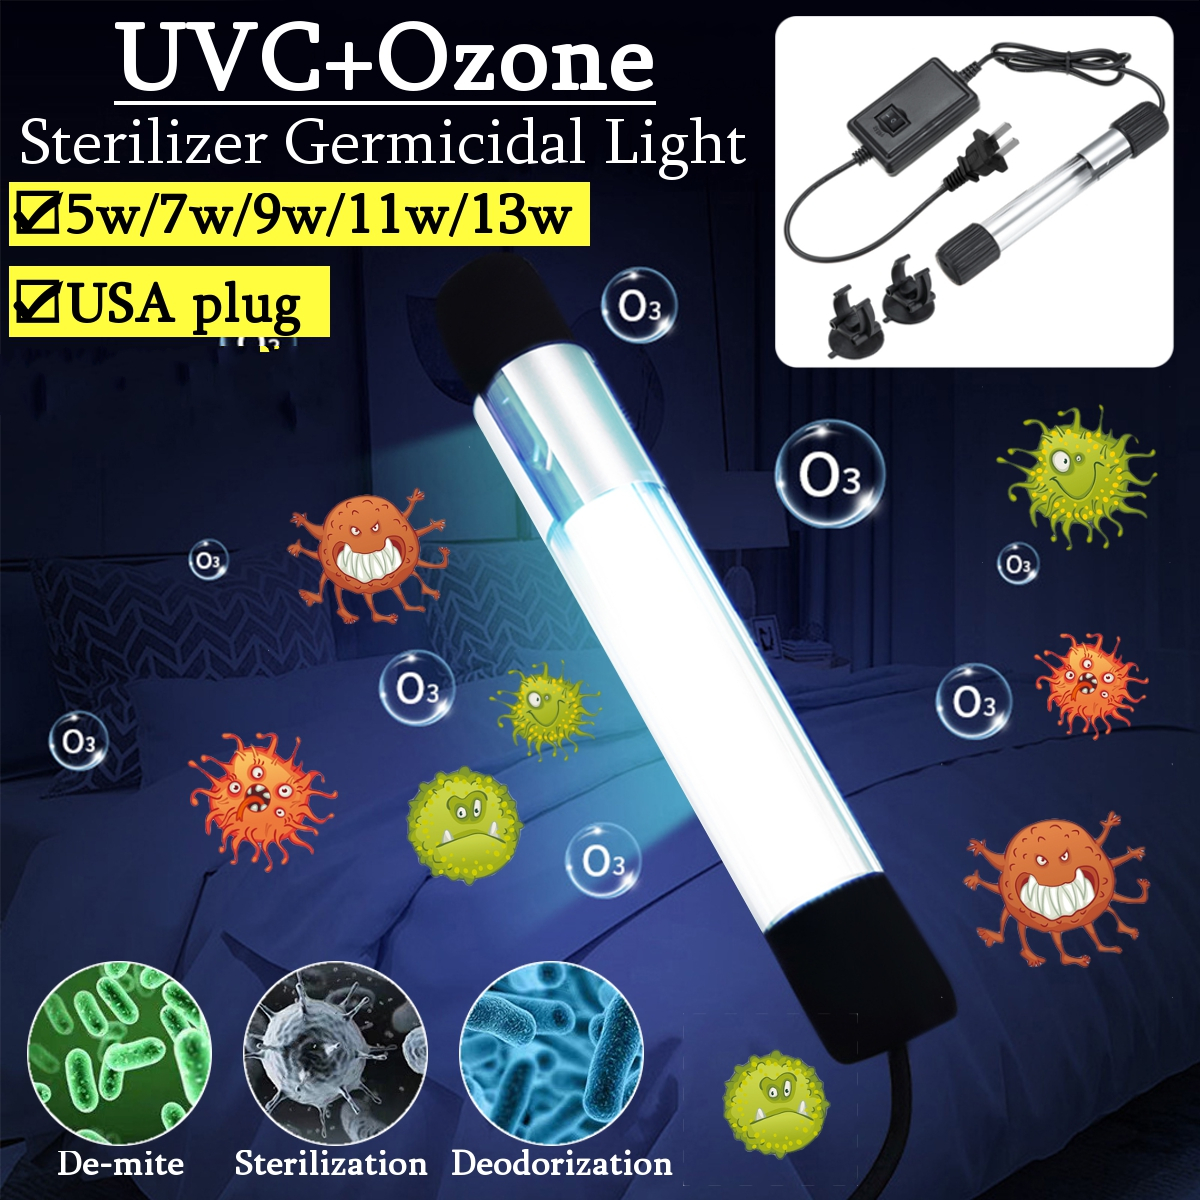 Find 5W/7W/9W/11W/13W UVC Ozone Germicidal Lamp Ultraviolet Sterilizer Disinfection Tube Light US Plug AC110V for Sale on Gipsybee.com with cryptocurrencies